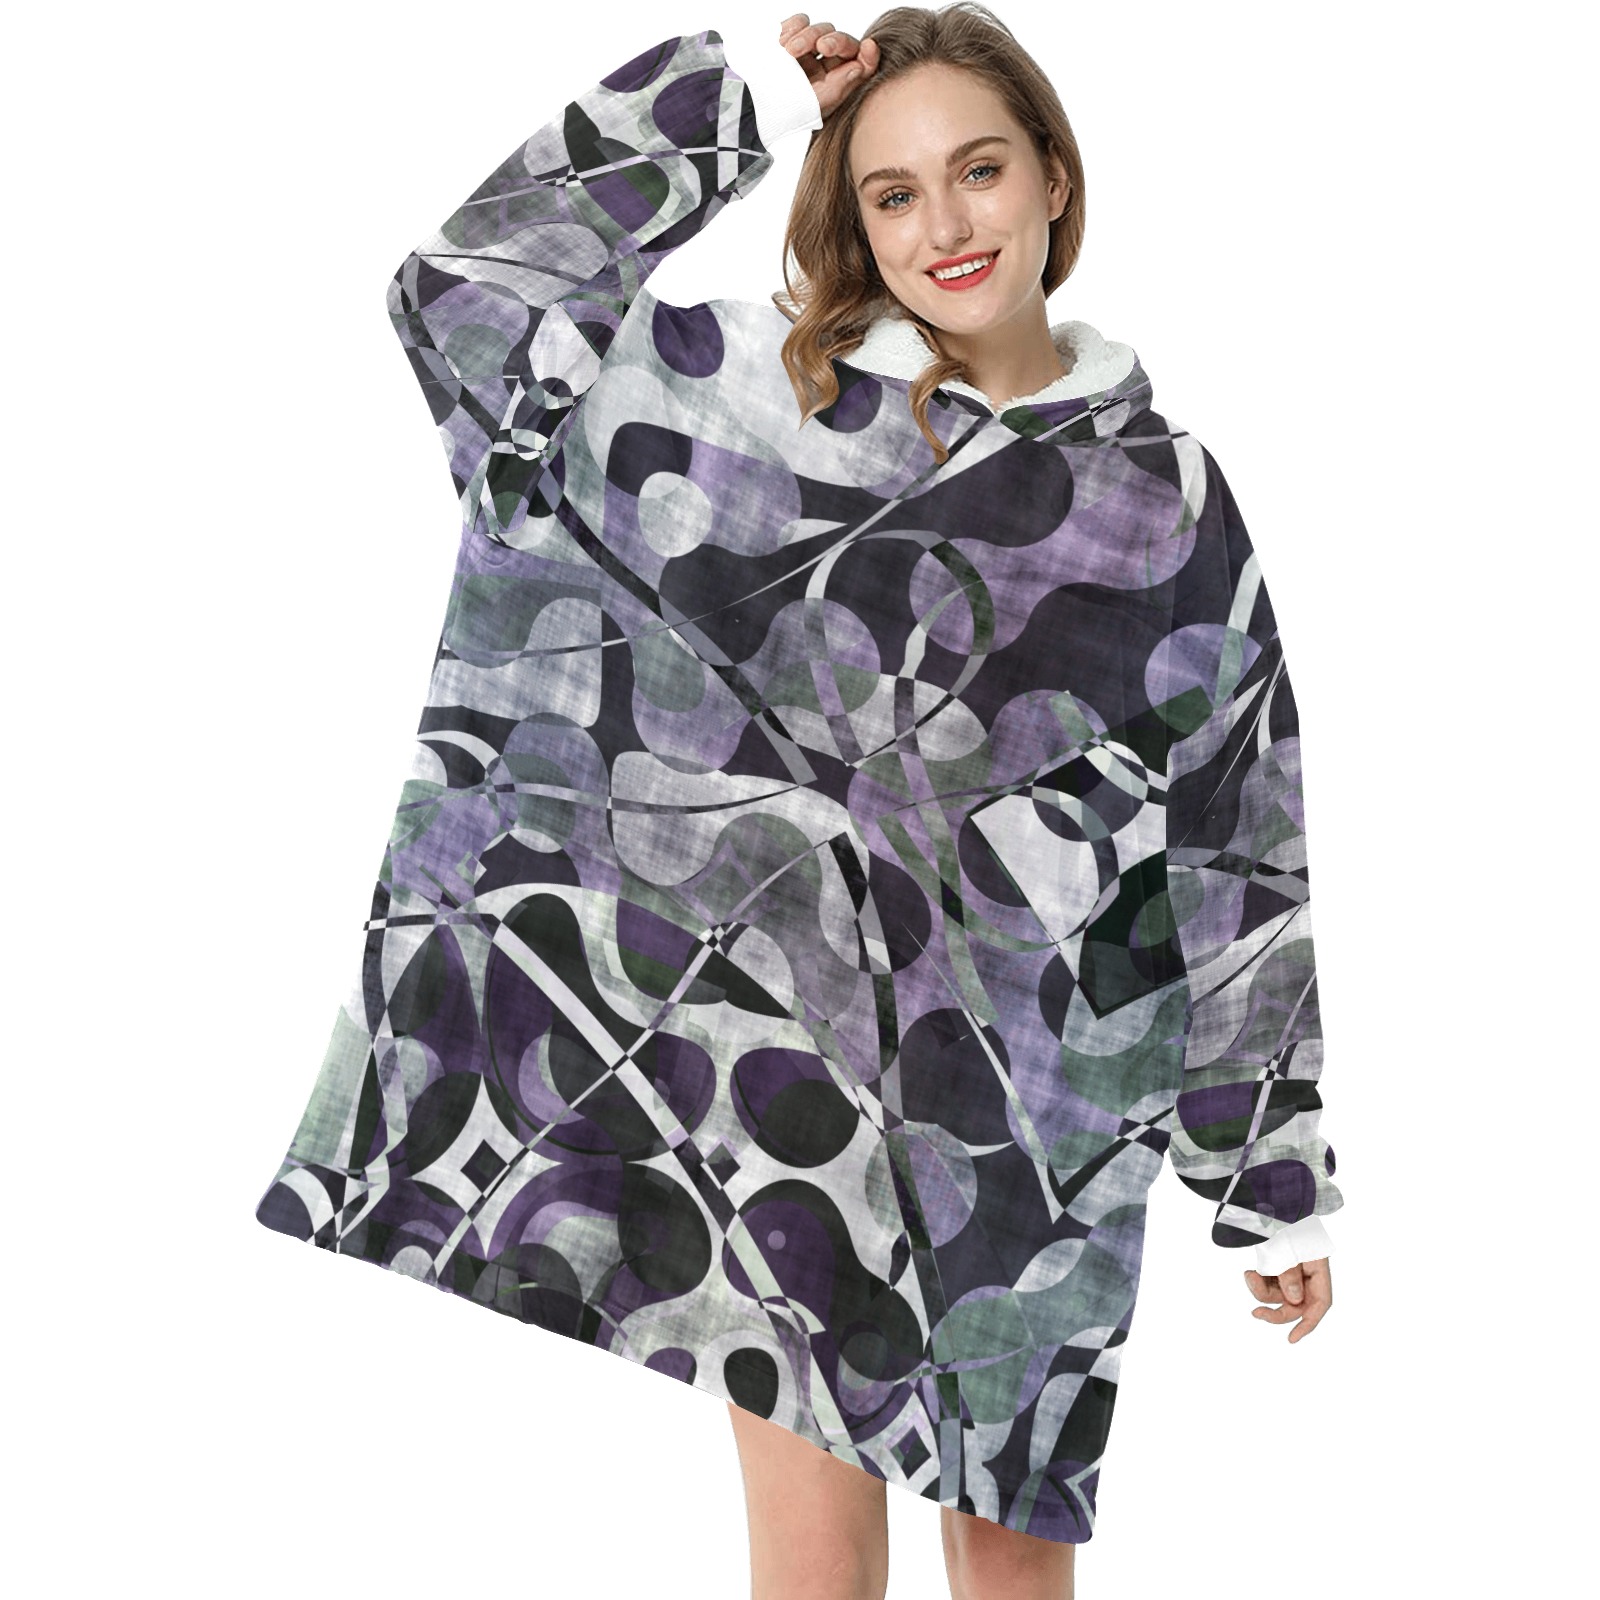 Chaos Blanket Hoodie for Women